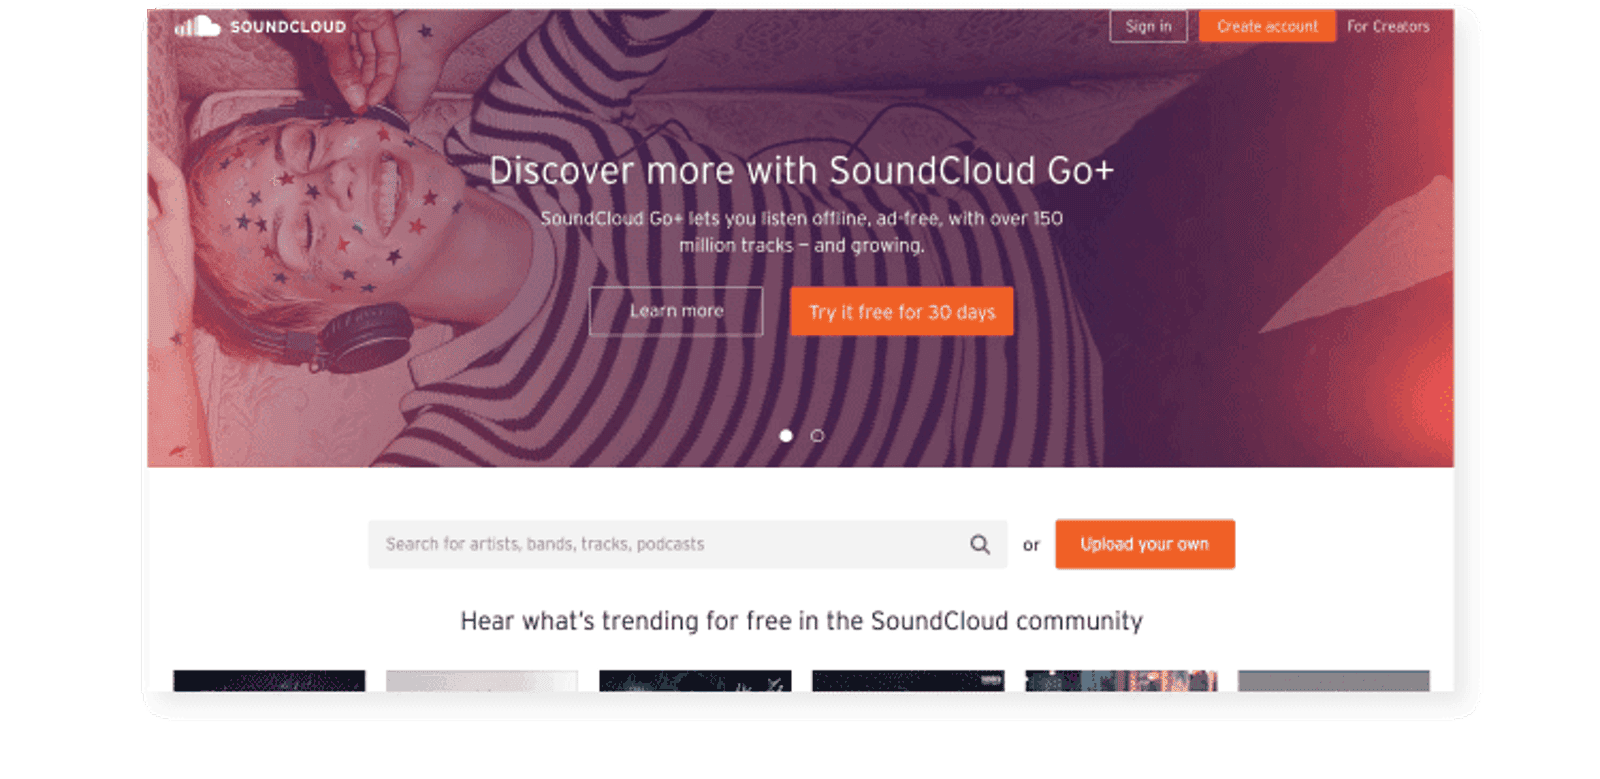 Soundcloud promotion with smartproxy proxies